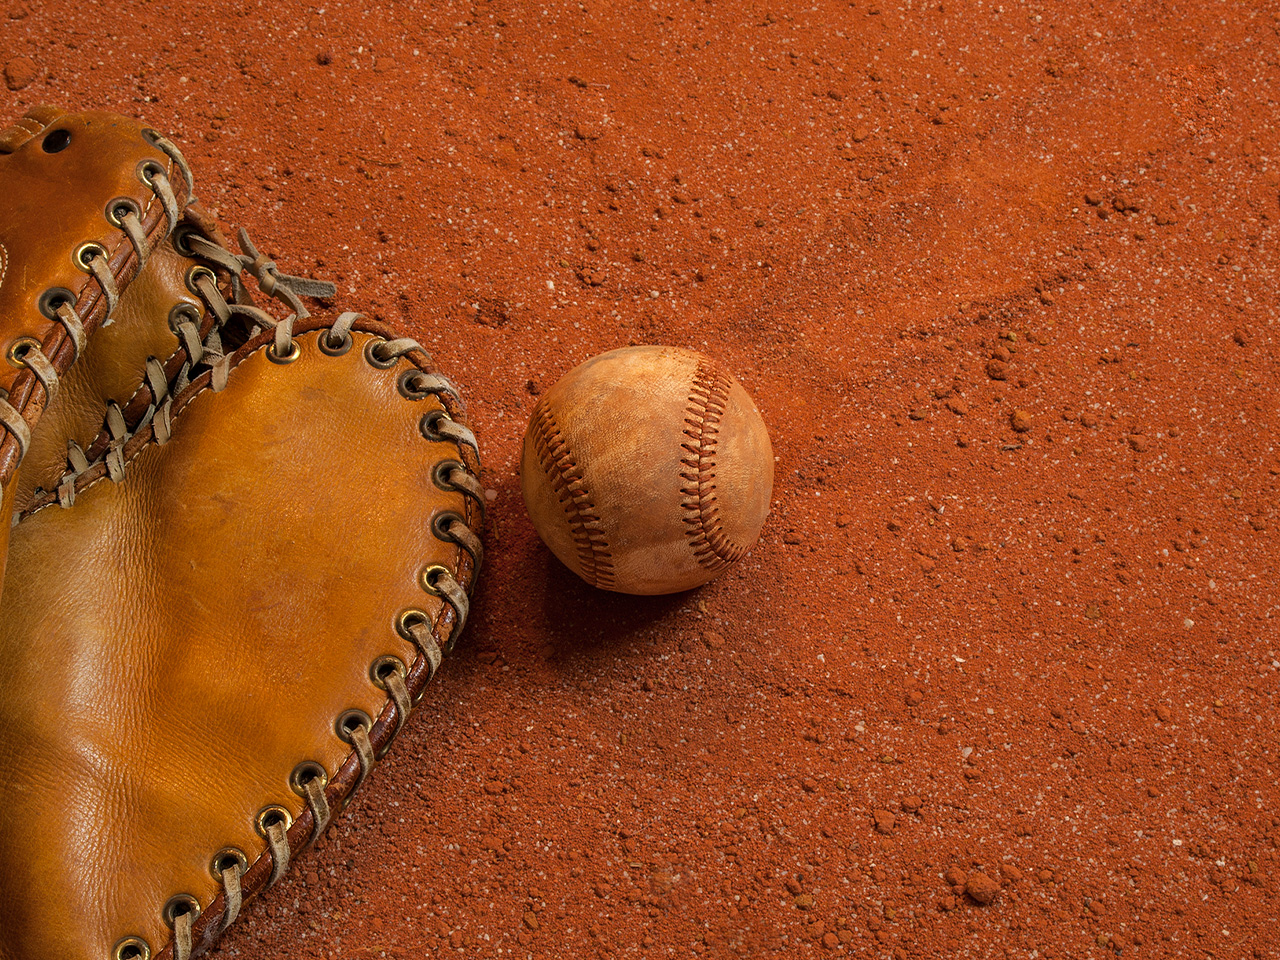 Softball Rules and Regulations